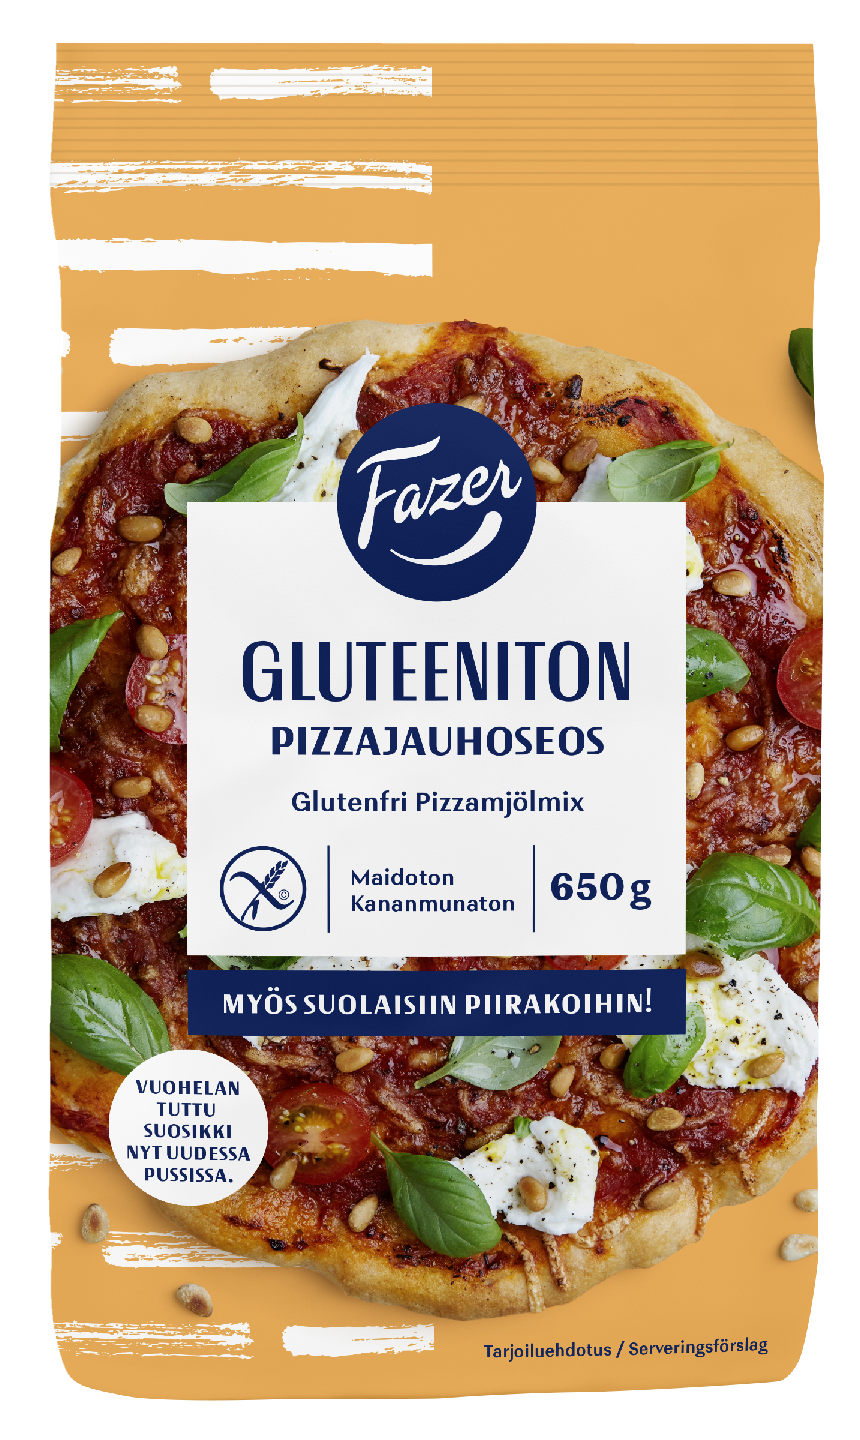 Fazer Gluteeniton pizzajauhoseos 650g